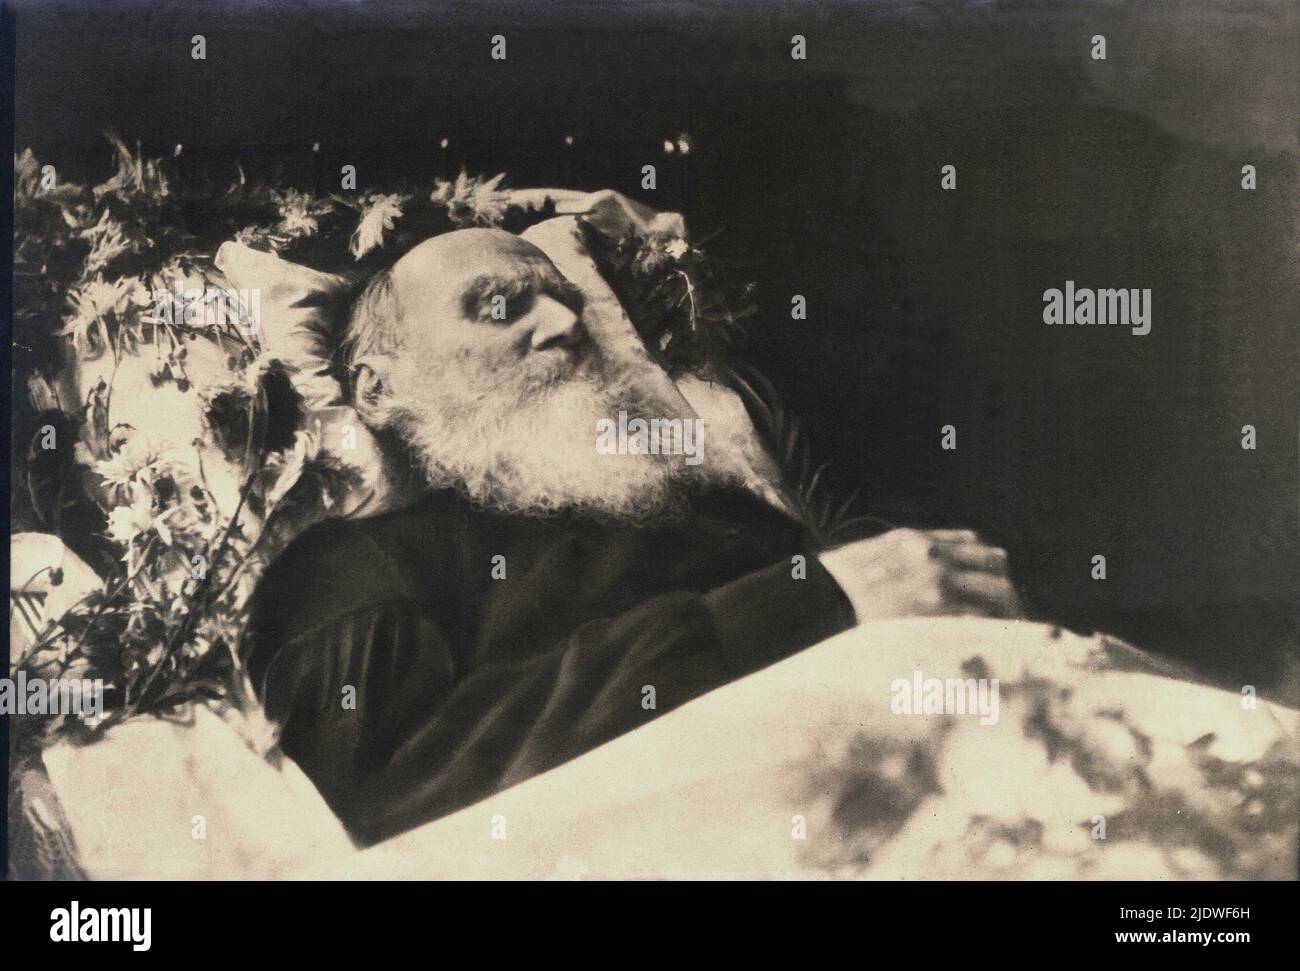 1910 , RUSSIE : le célèbre poète et écrivain russe Lev Nikolaevic TOLSTOJ ( 1828 - 1910 ) Rester mort au lit dans sa maison d'Astapovo - POST MORTEM - post mortem - SCRITTORE _ LETTERATO - LETTERATURA - LITTÉRATURE - POÈTE - POETA - POÉSIE - POESIA - TOLSTOÏ - TOLSTOÏ - Leone - letto di morte - morto - defunto - cavere - longue barbe blanche - lunga barba bianca - RUSSIE - catafalco - pompe funebri onoranze - uomo vecchio anziano - ancien homme - --- Archivio GBB Banque D'Images